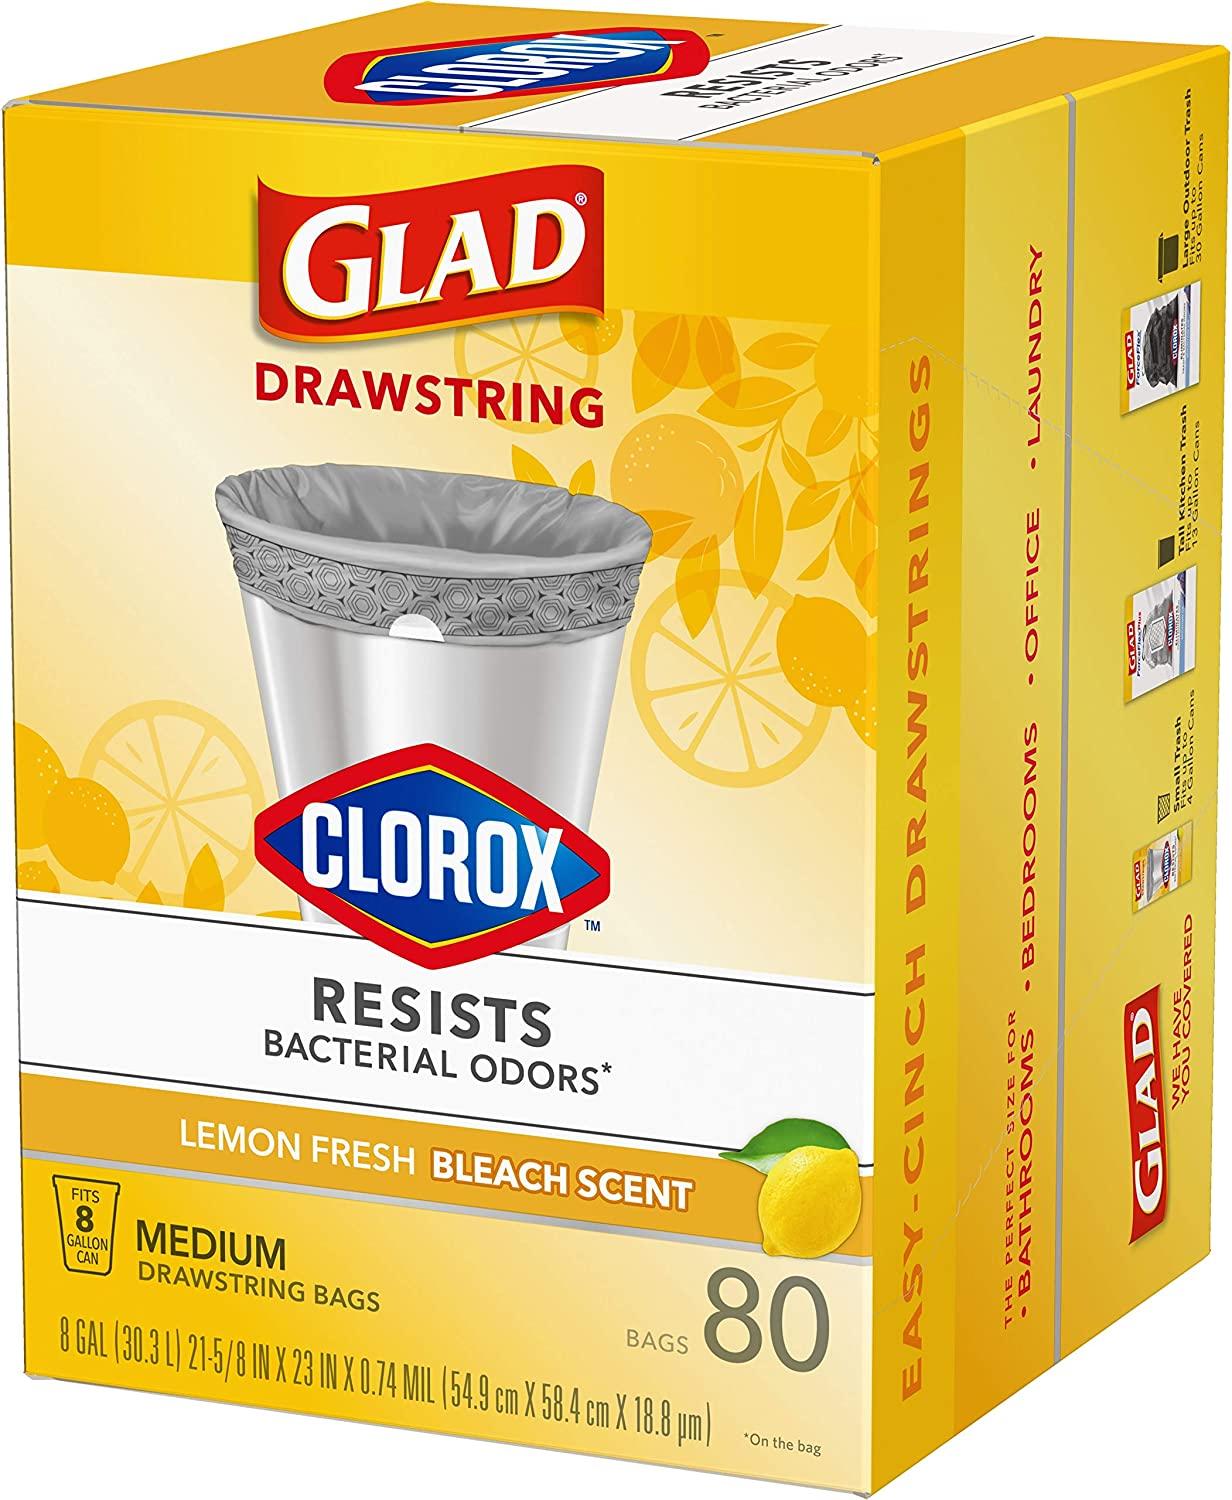 Clorox Drawstring Bags, Lemon Fresh Bleach Scent, Medium, 8 Gallon 26 Ea, Cleaning